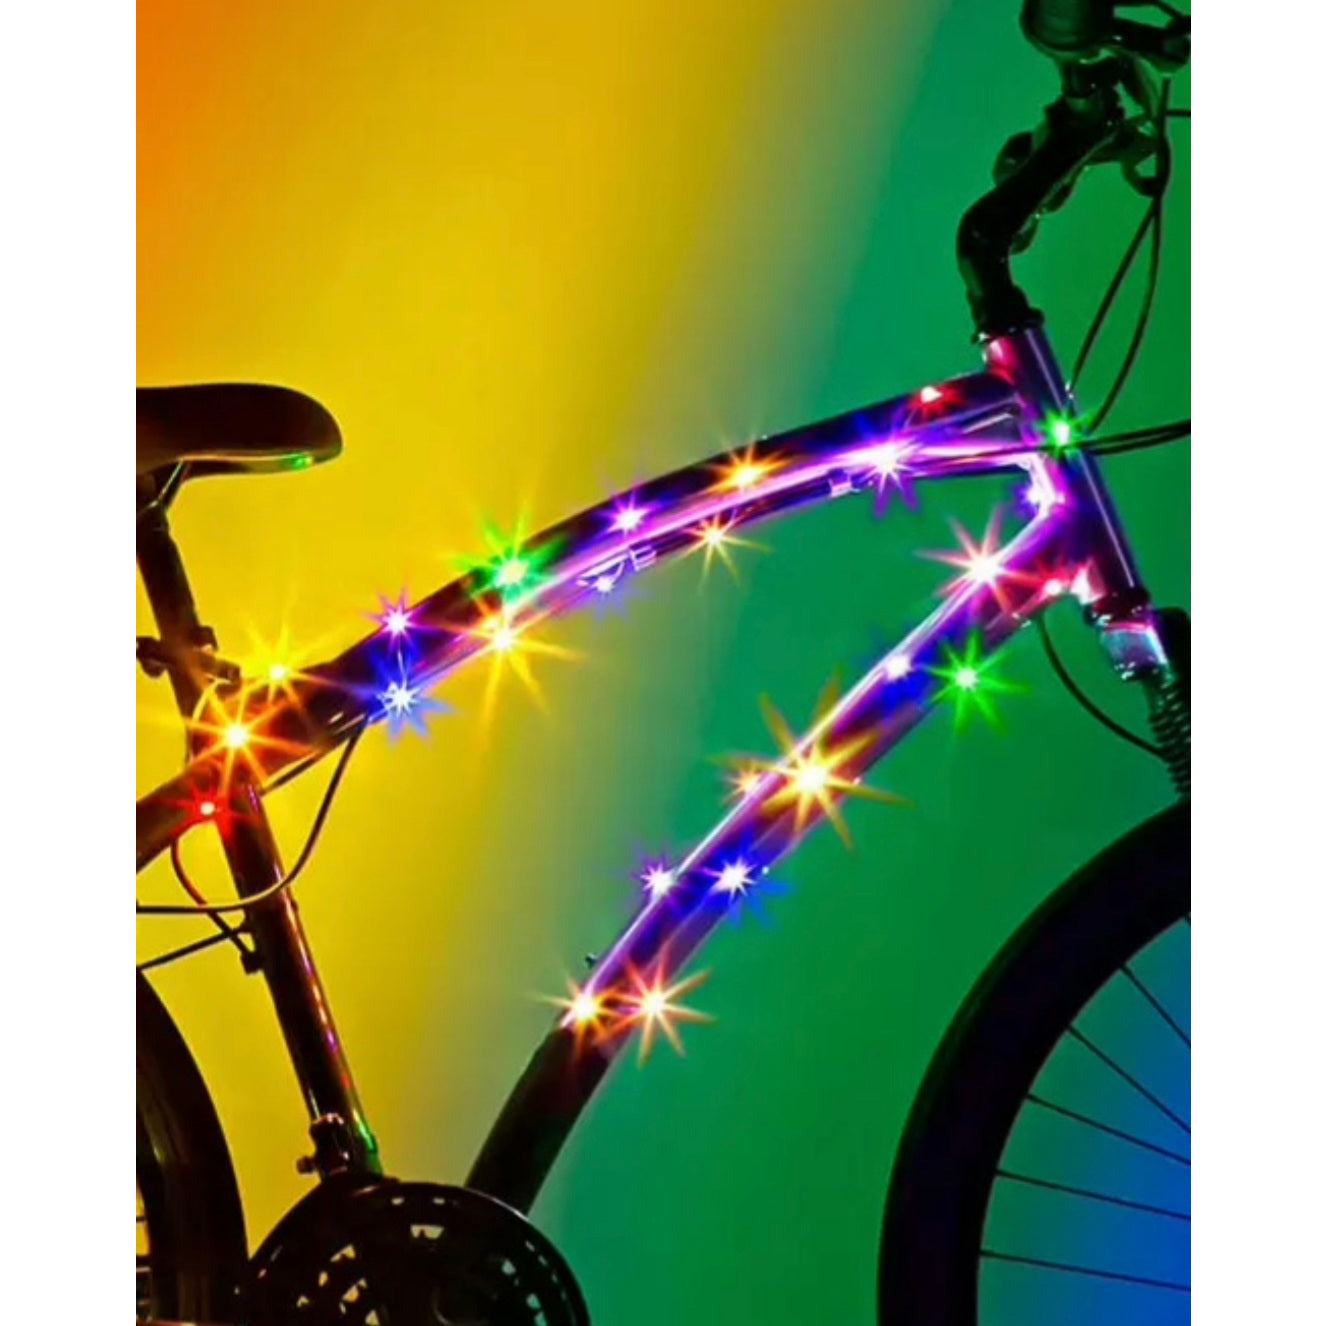 Rainbow Bike Lights